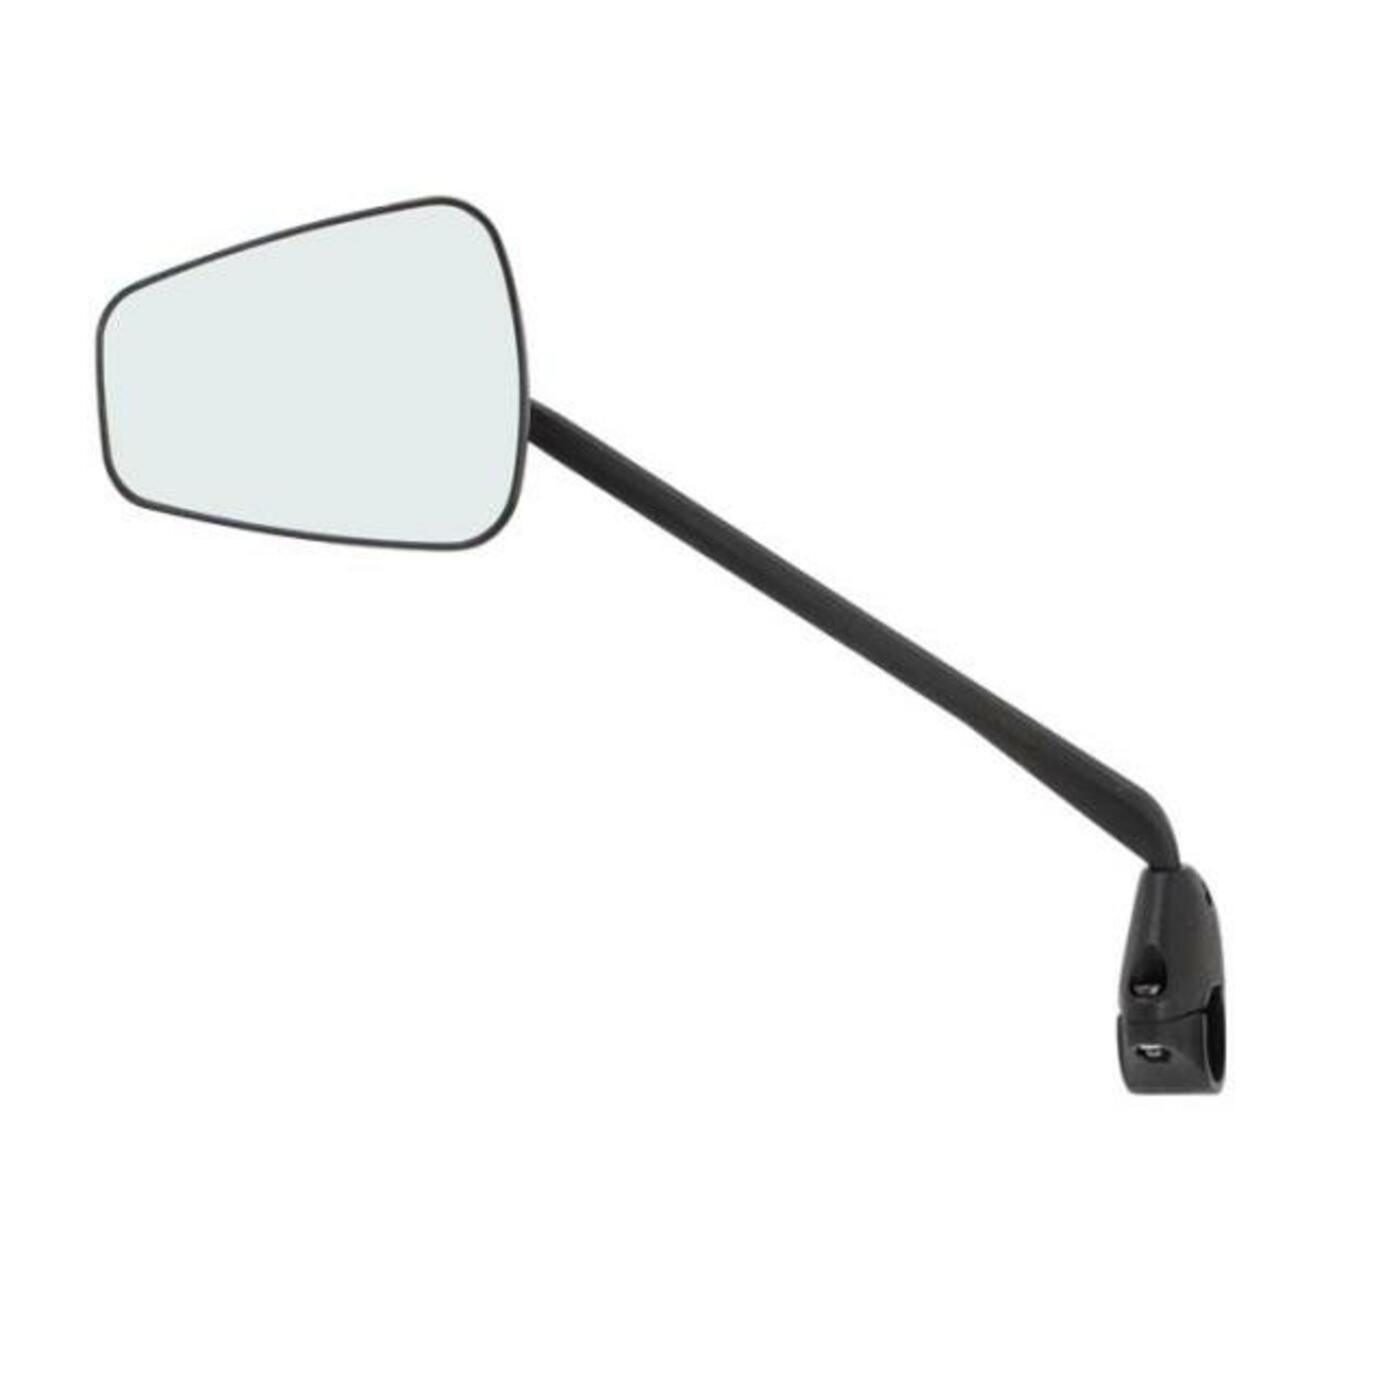 Zéfal Espion Z56 - Left Large mirror with adjustable rod, On